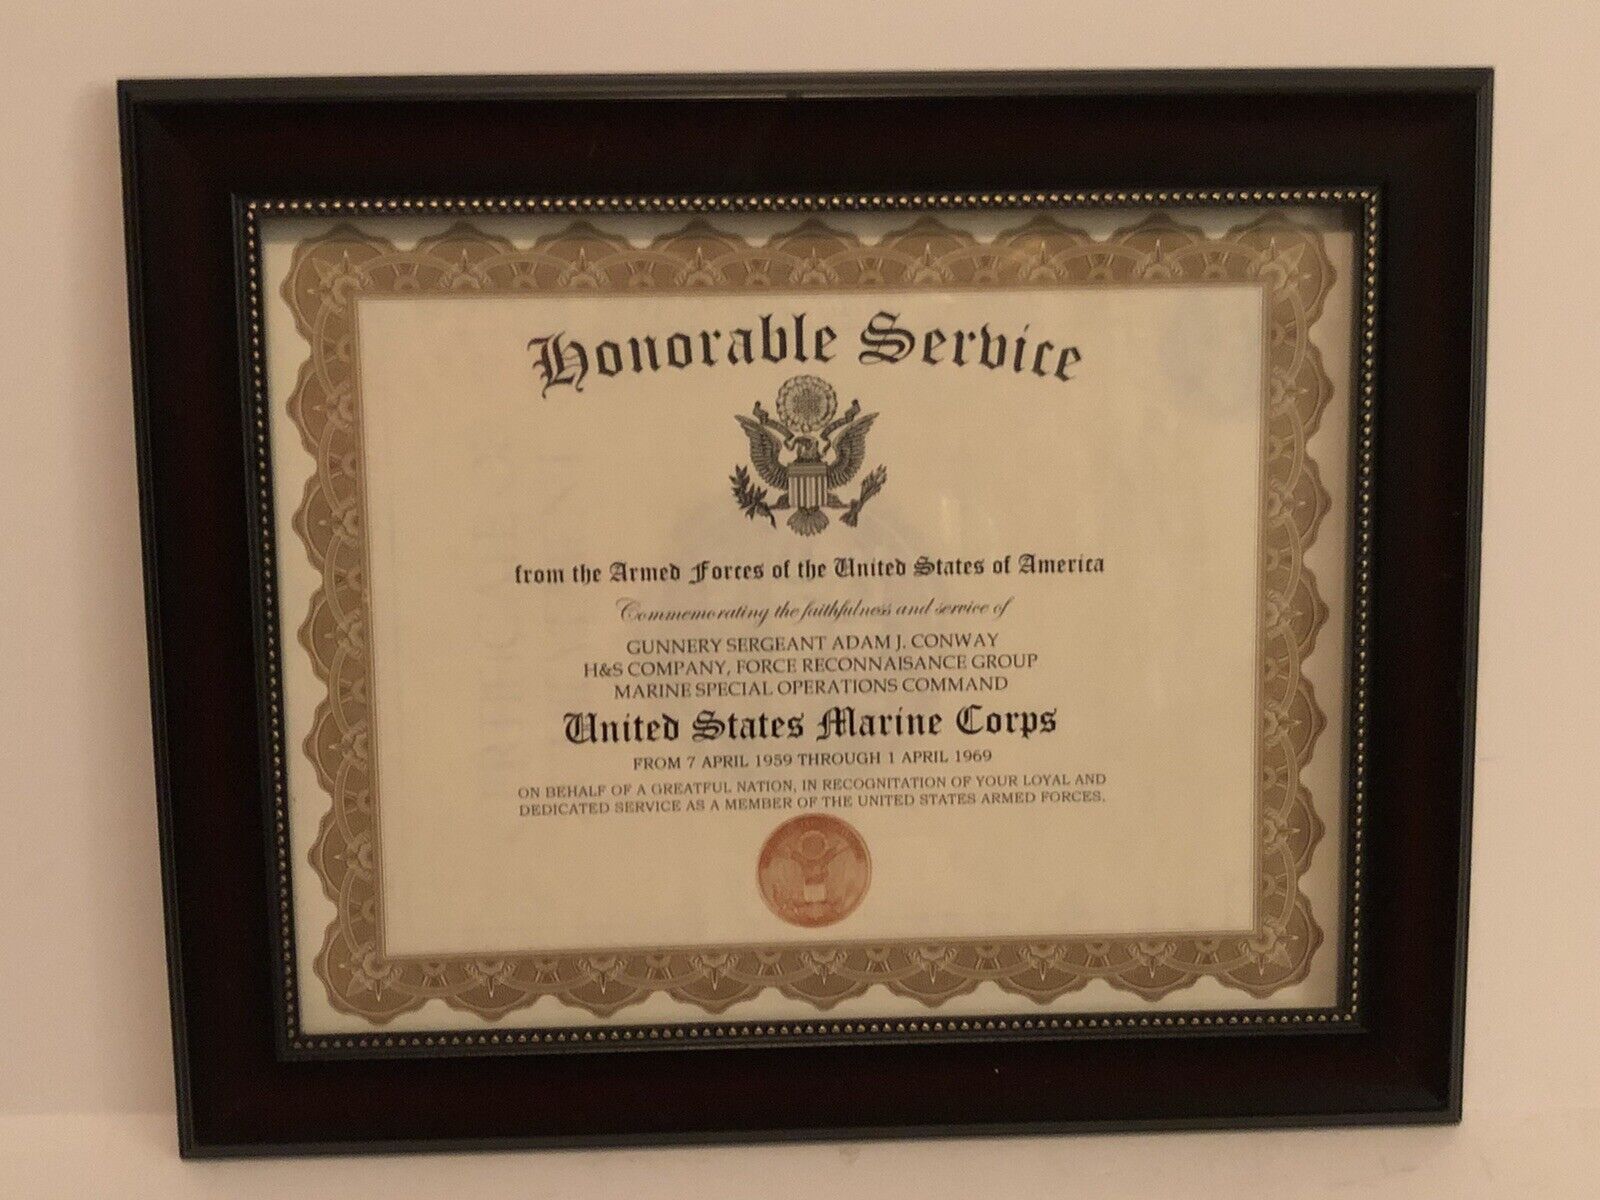 HONORABLE SERVICE~U.S. MARINE CORPS -Commemorative Certificate w/Custom Printing